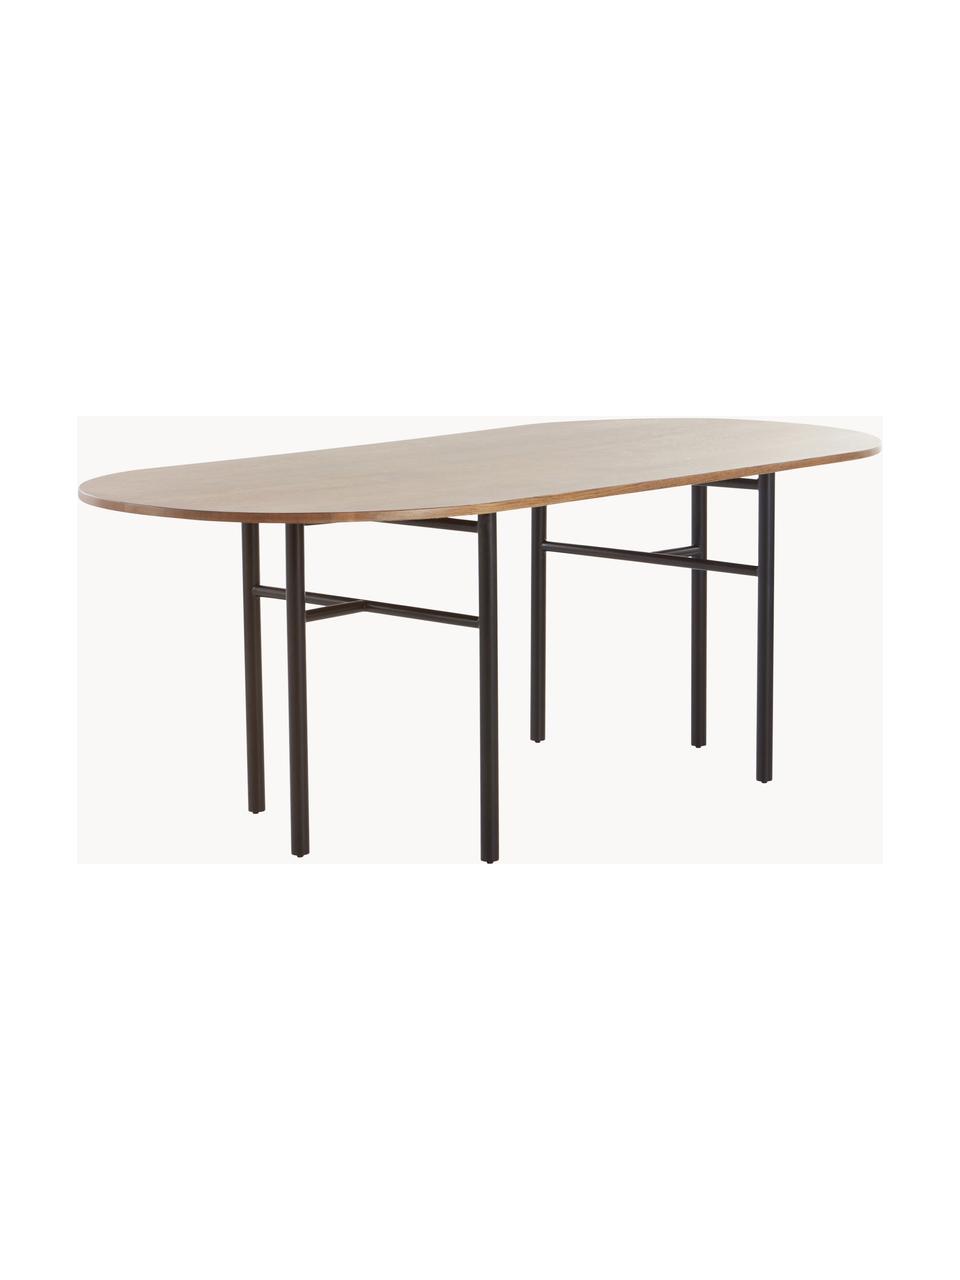 Table ovale en chêne Vejby, 210 x 95 cm, Bois de chêne, larg. 210 x prof. 95 cm